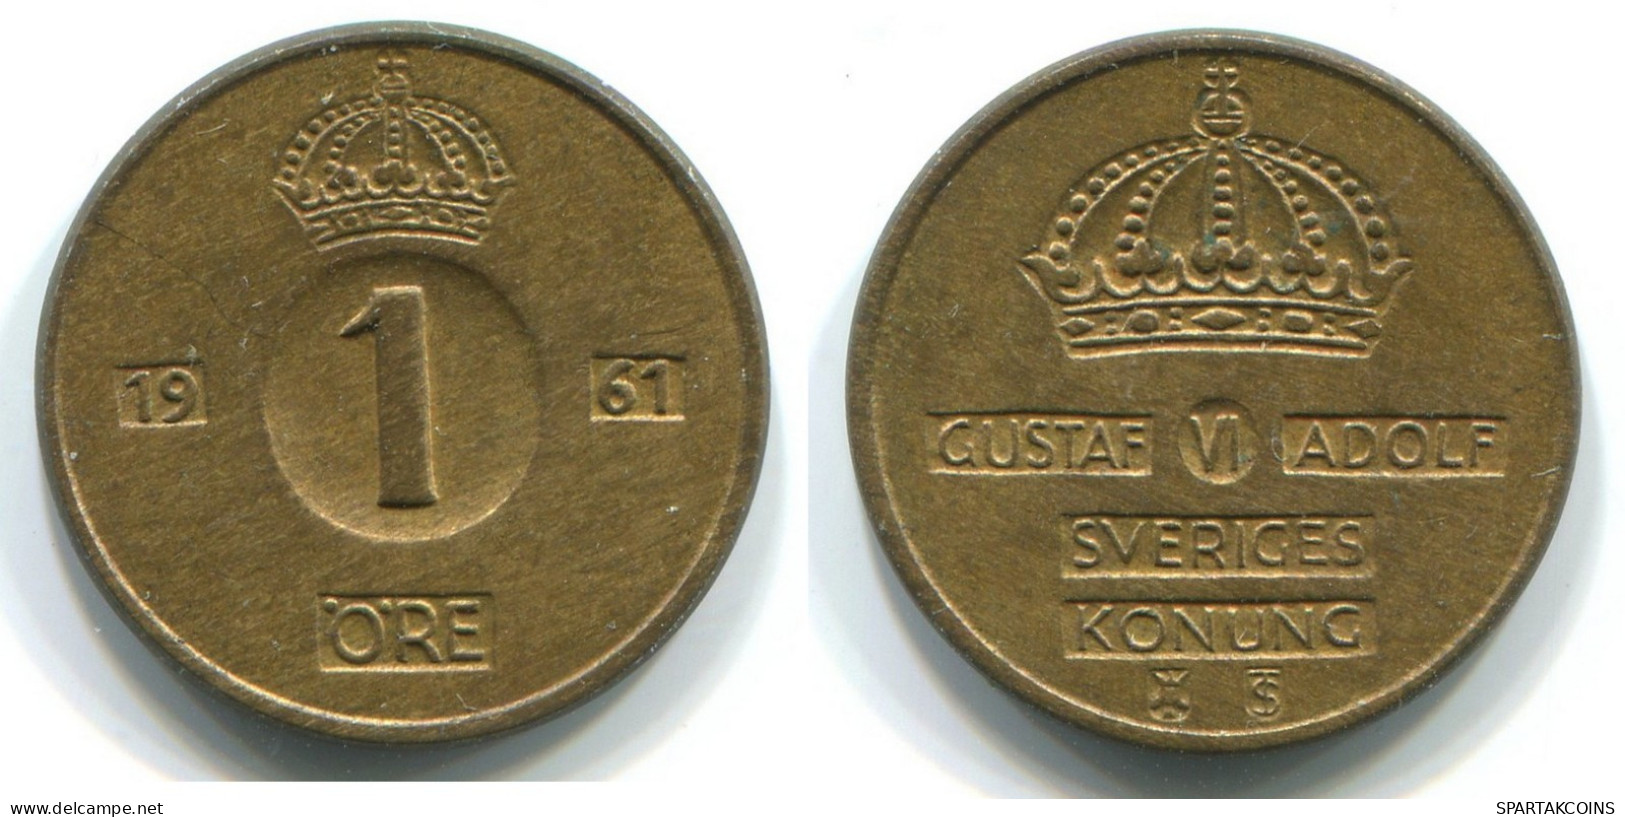 1 ORE 1961 SWEDEN Coin #WW1106.U.A - Schweden